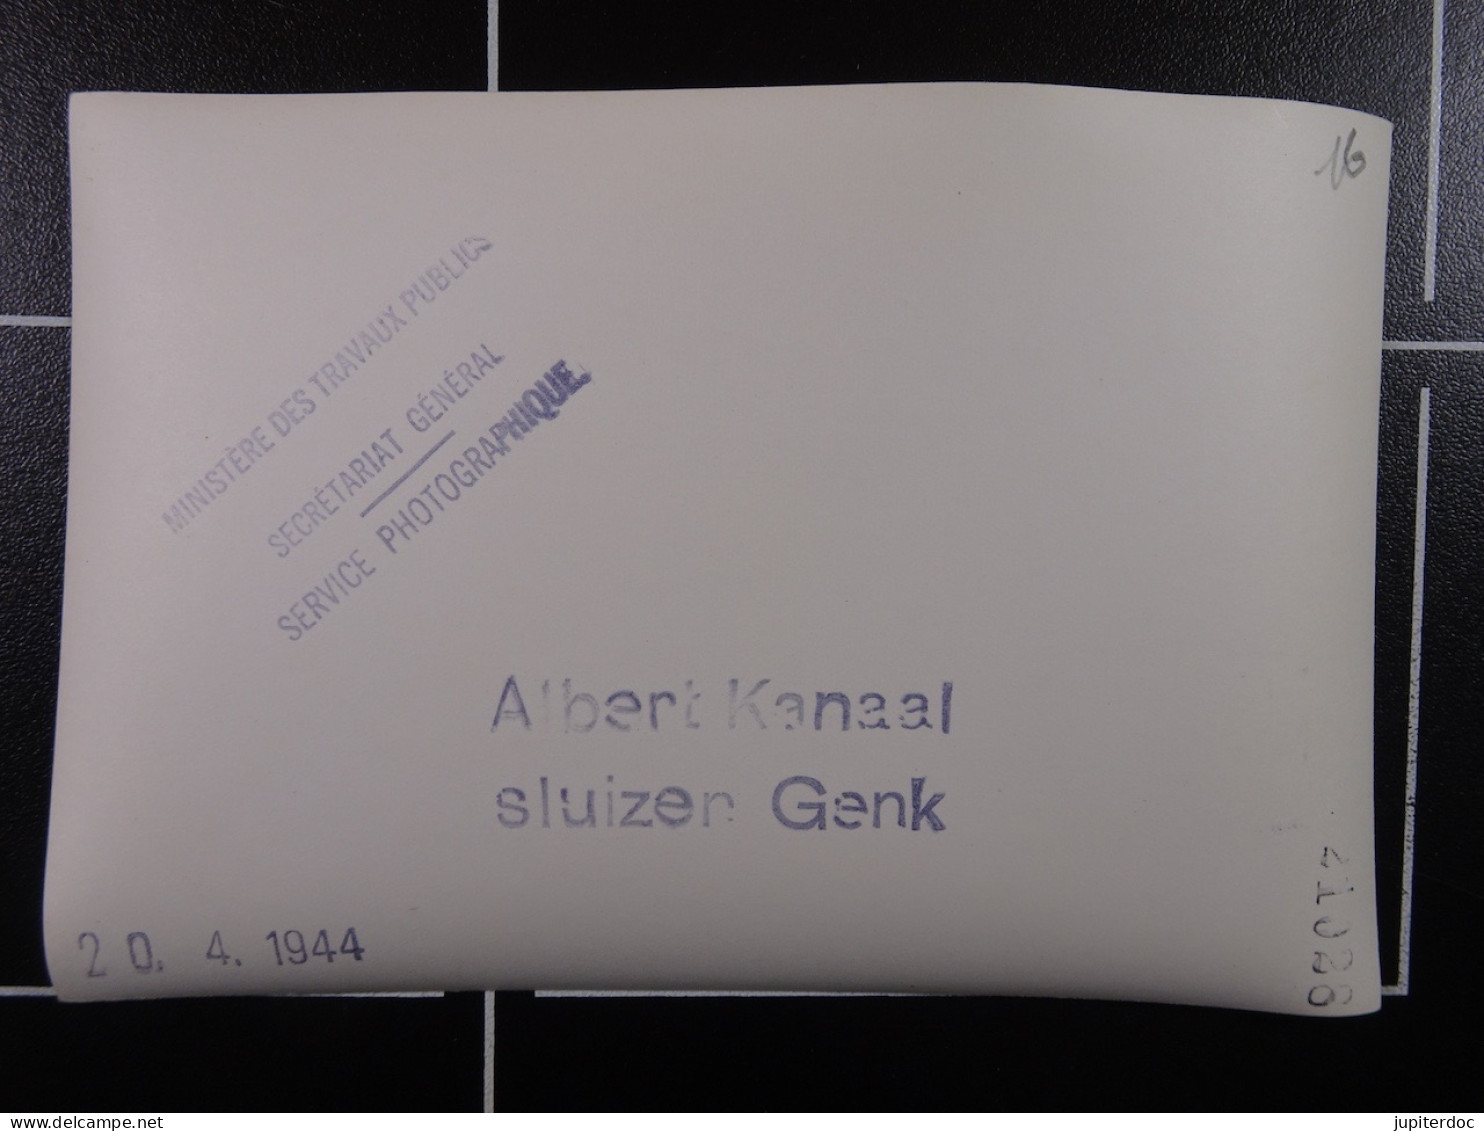 Min.Trav.Pub. Albert Kanaal Sluizen Genk 20-04-1944  /16/ - Diploma & School Reports